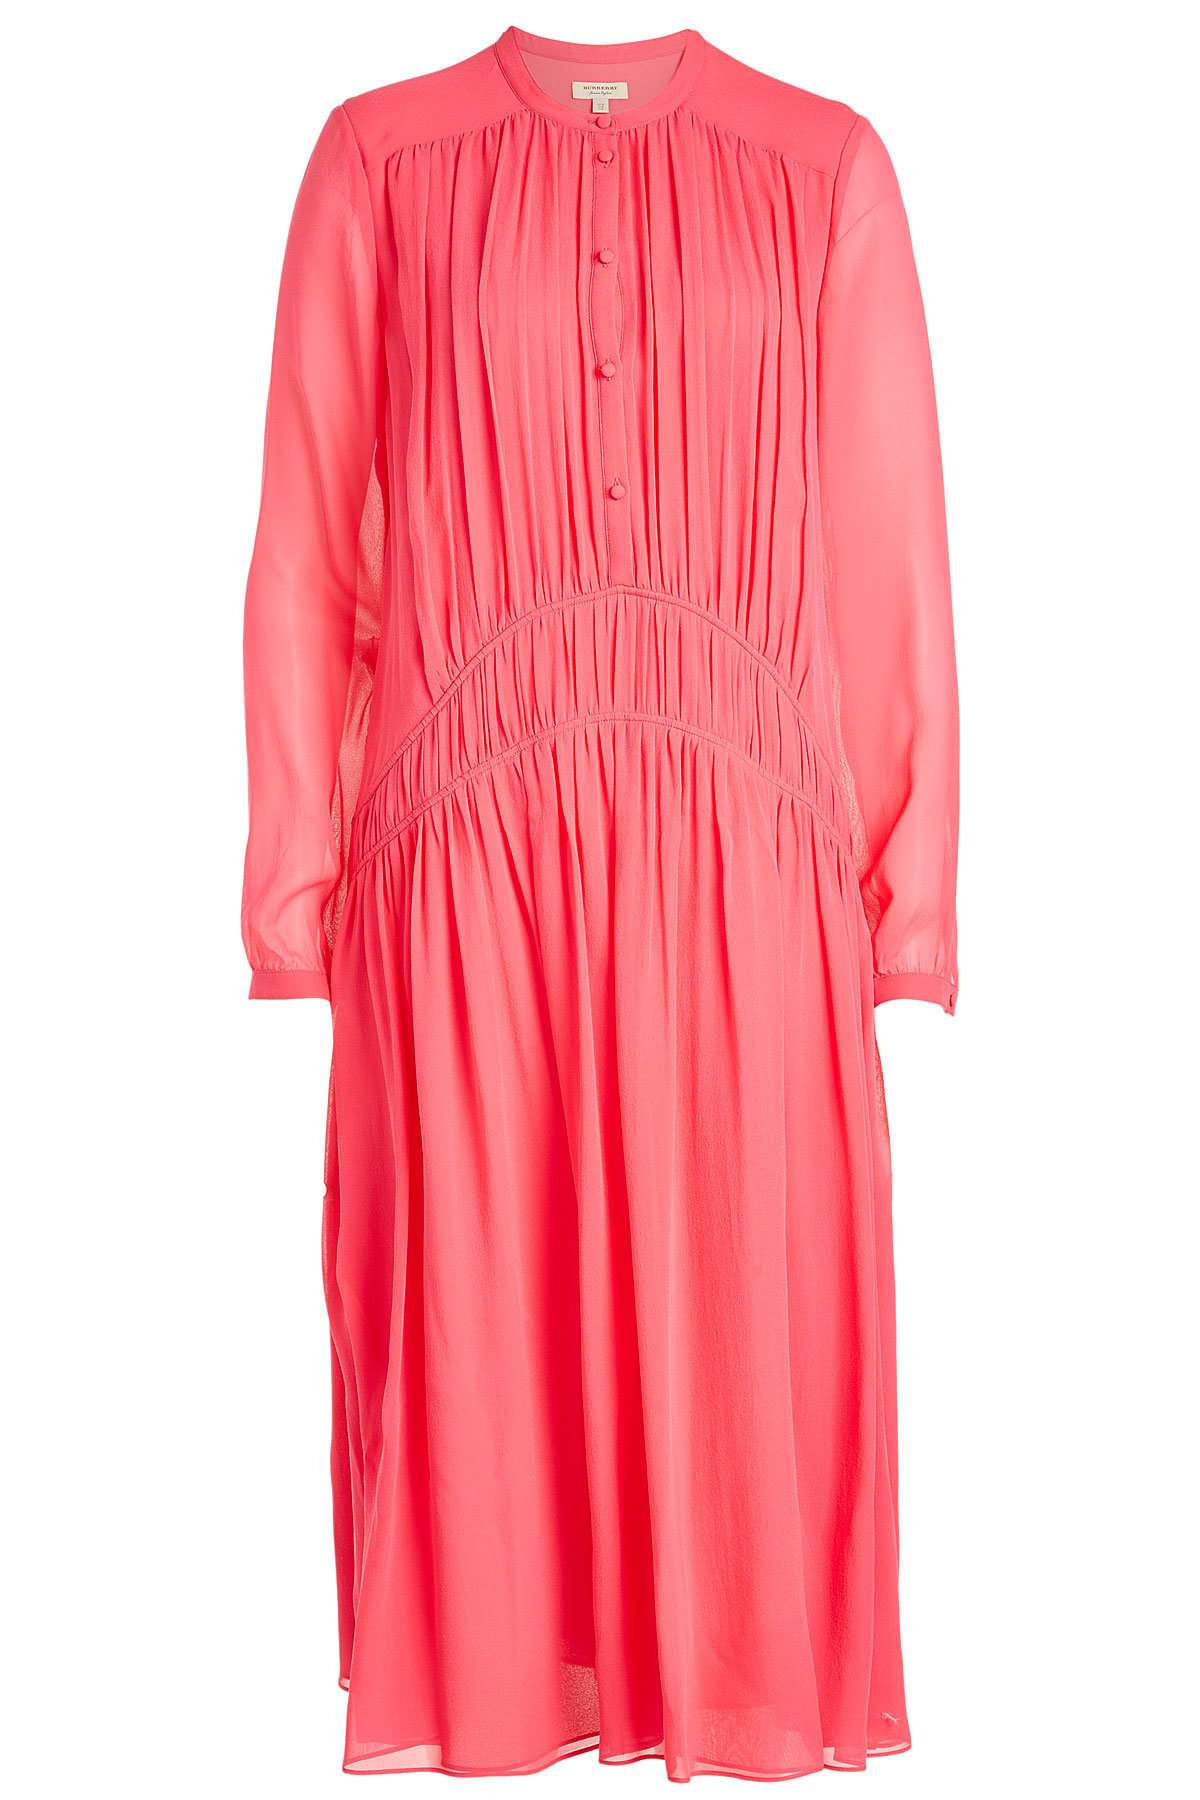 Burberry - Kara Button-Down Silk Chiffon Dress